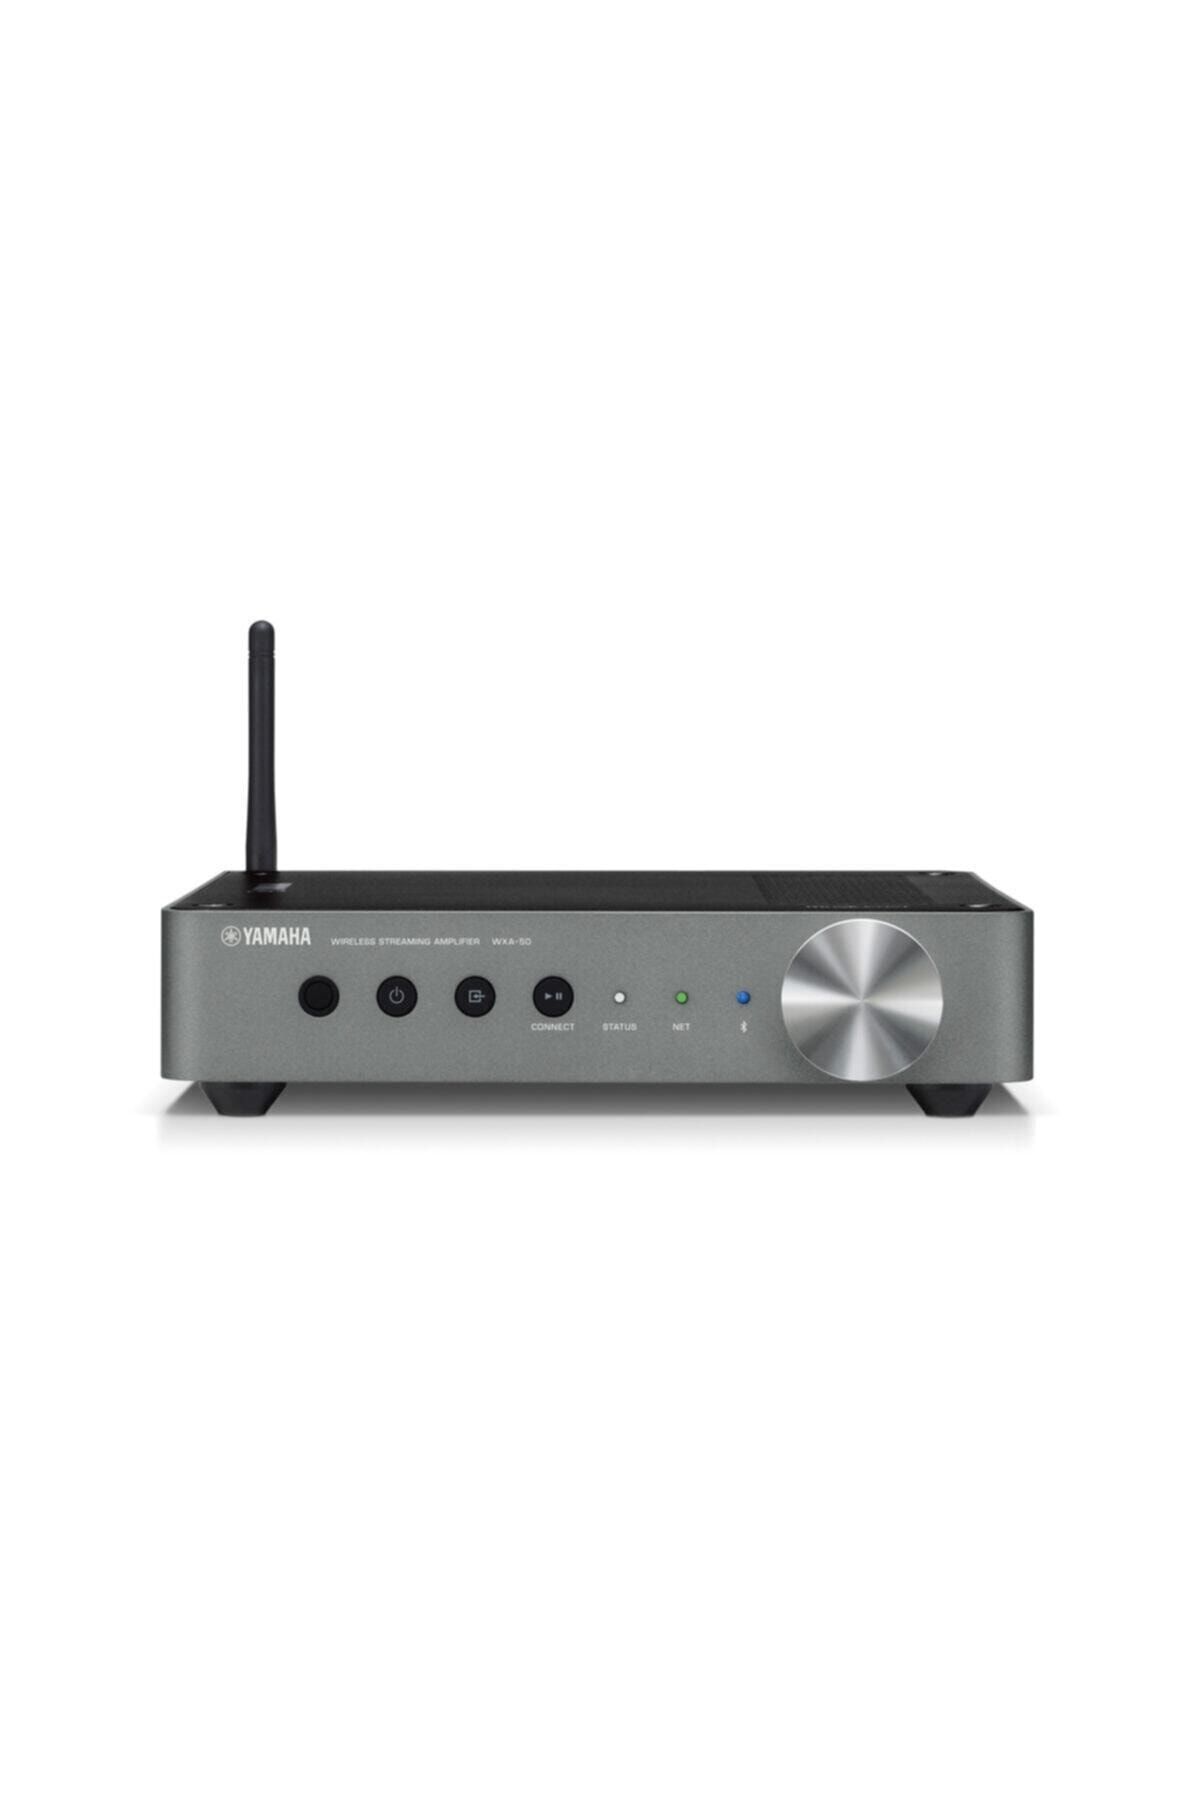 Yamaha Musiccast Wxa-50 Network Streaming Amplifer